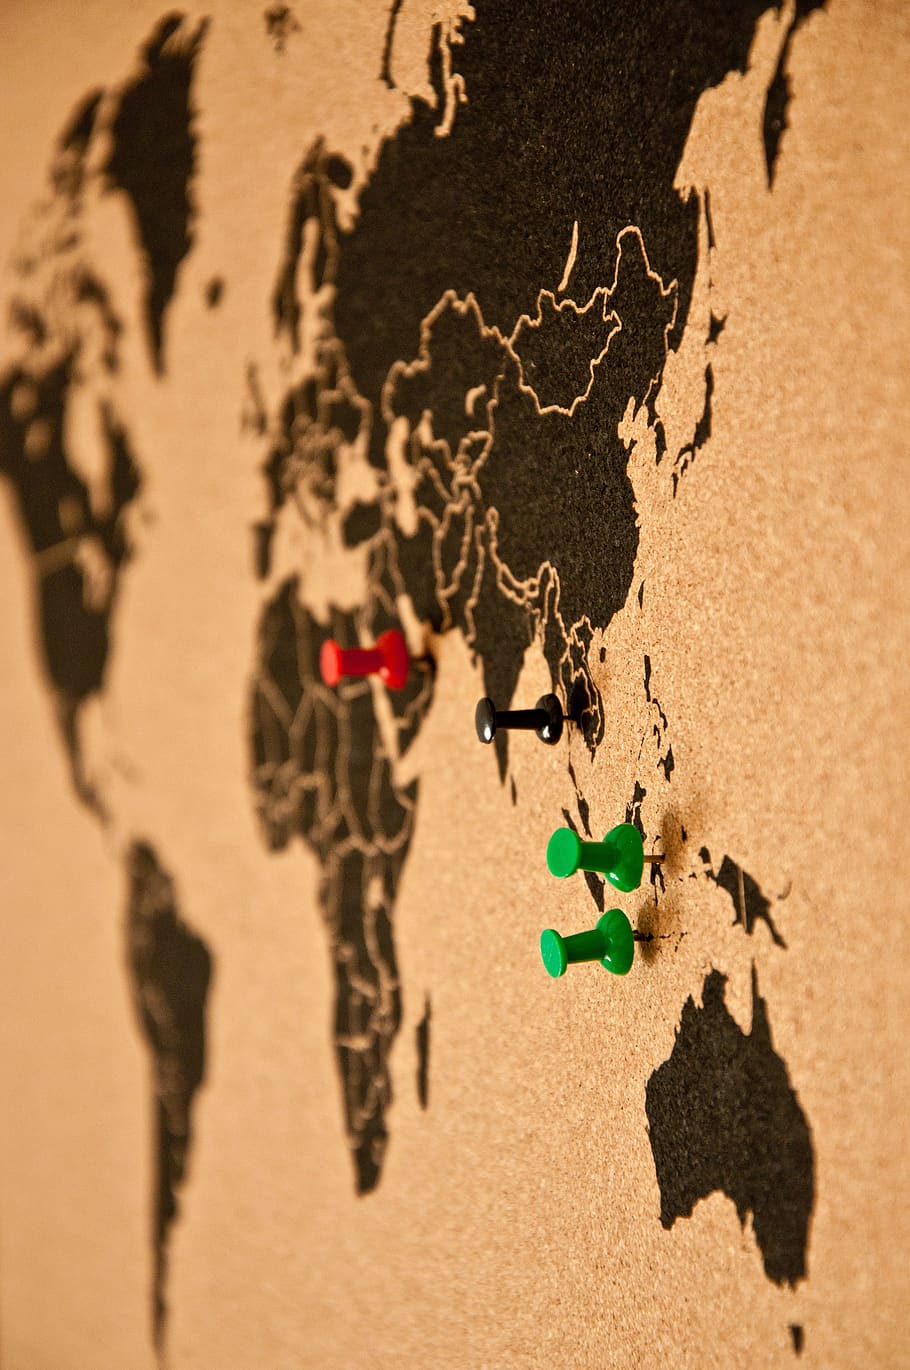 pin board, bulletin board, map of the world, plug-in wall, pins, cork wall, pin, trip around the world, asia, sand